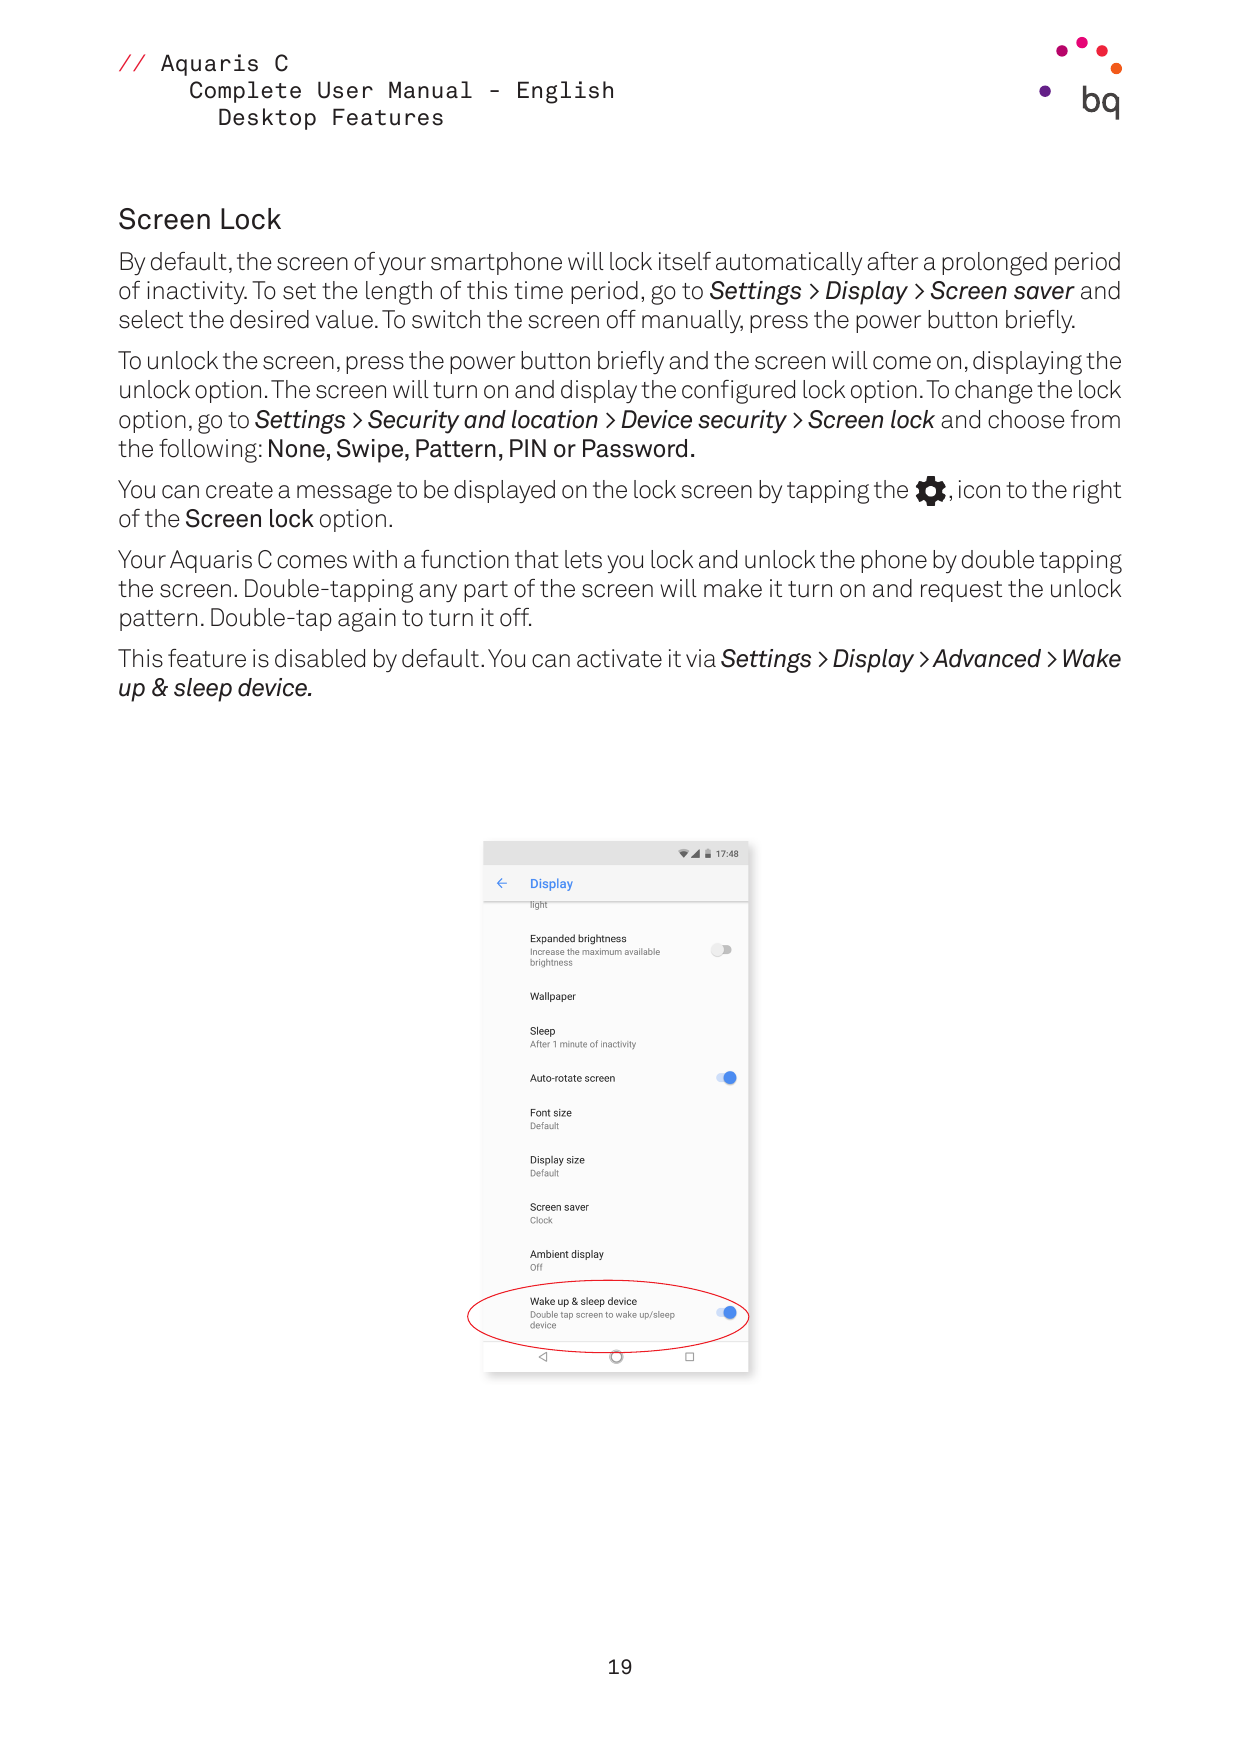 // Aquaris CComplete User Manual - EnglishDesktop FeaturesScreen LockBy default, the screen of your smartphone will lock itself 